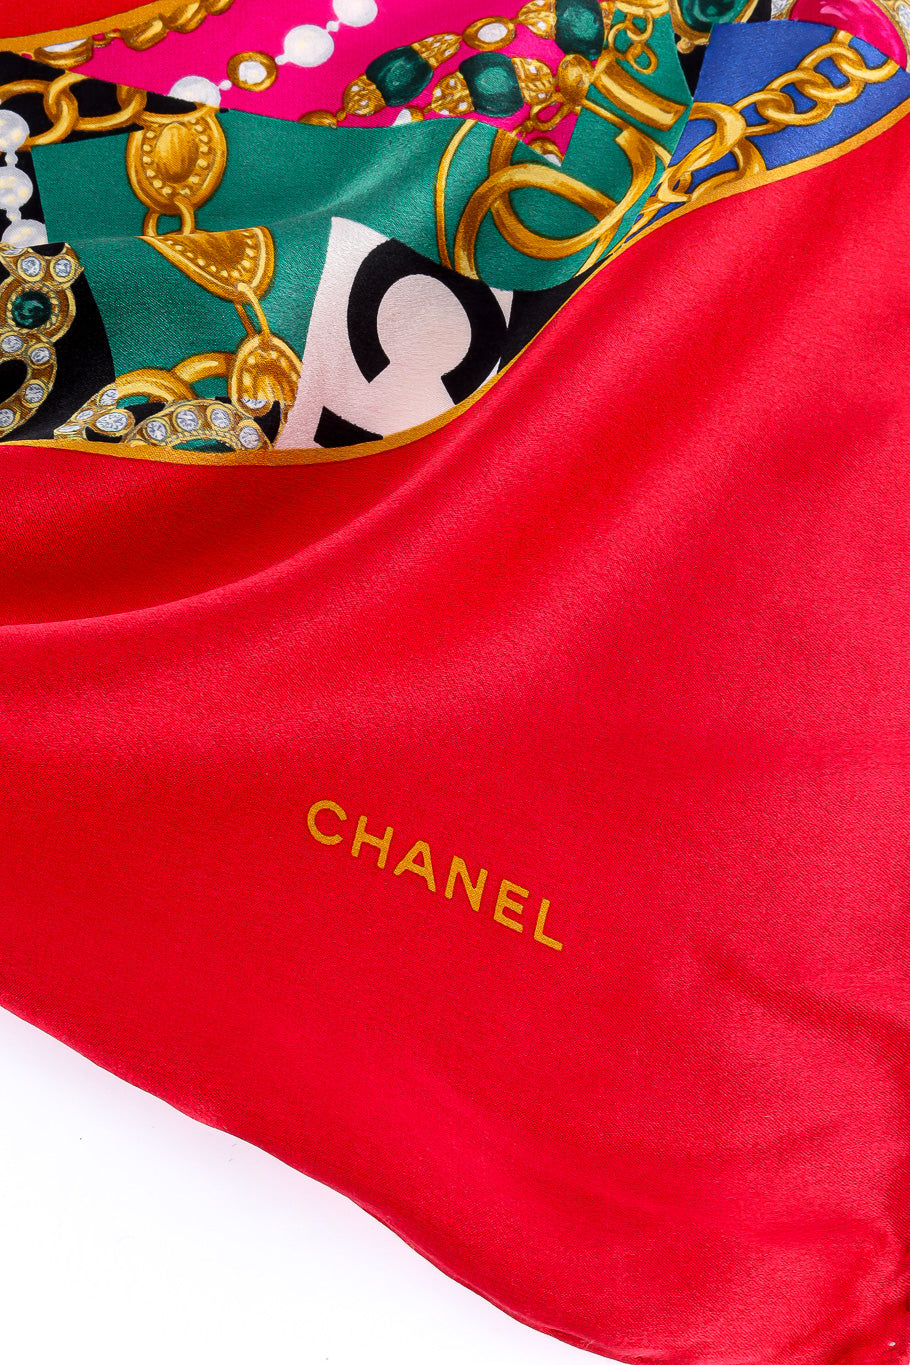 Large mosaic print emblem scarf by Chanel label @recessla